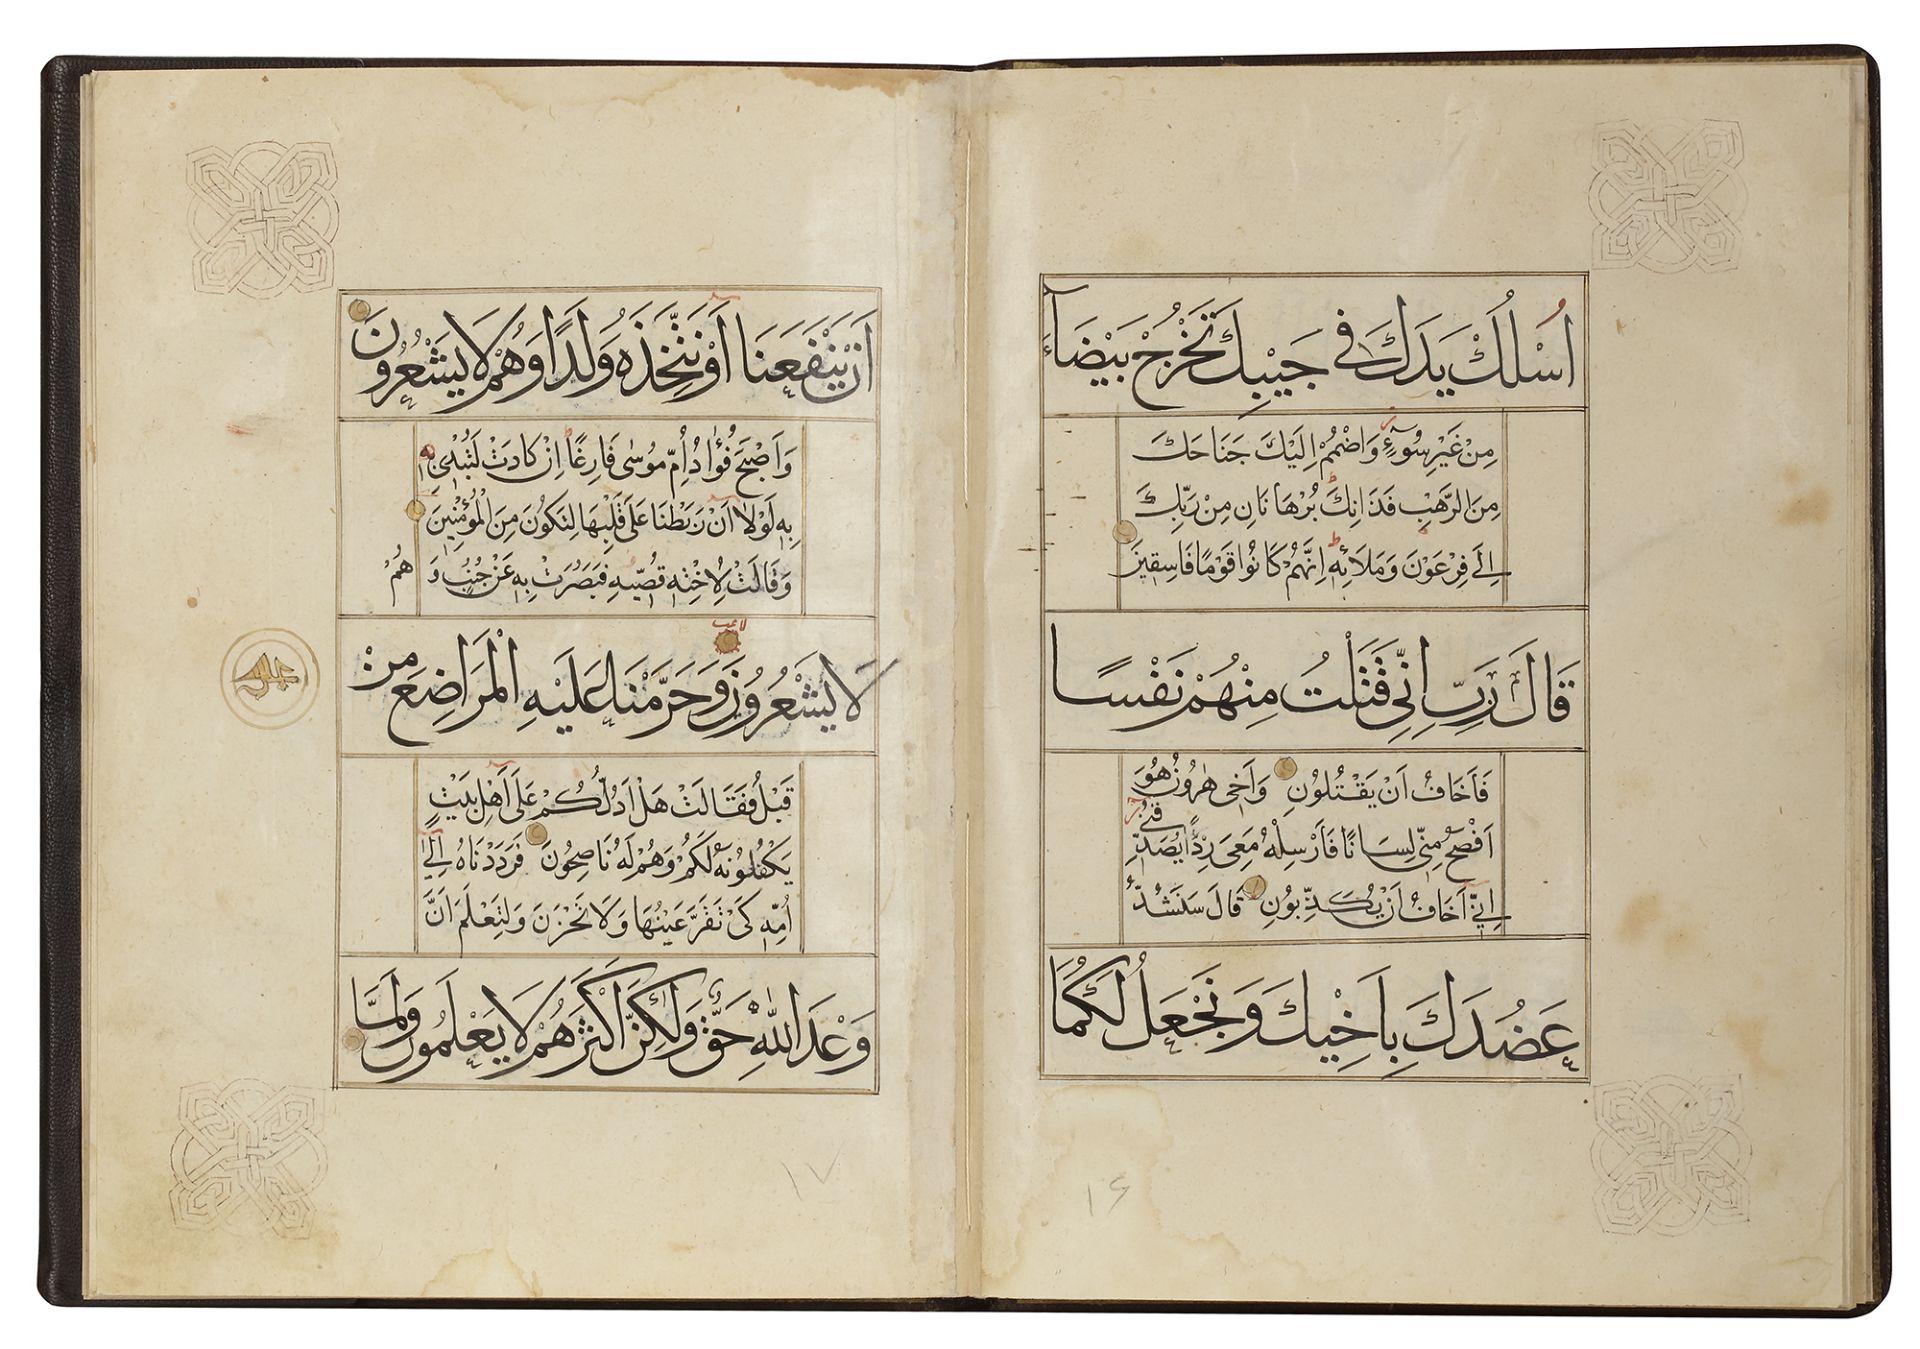 A LATE TIMURID QURAN JUZ, BY AHMED AL-RUMI IN 858 AH/1454 AD - Bild 2 aus 4